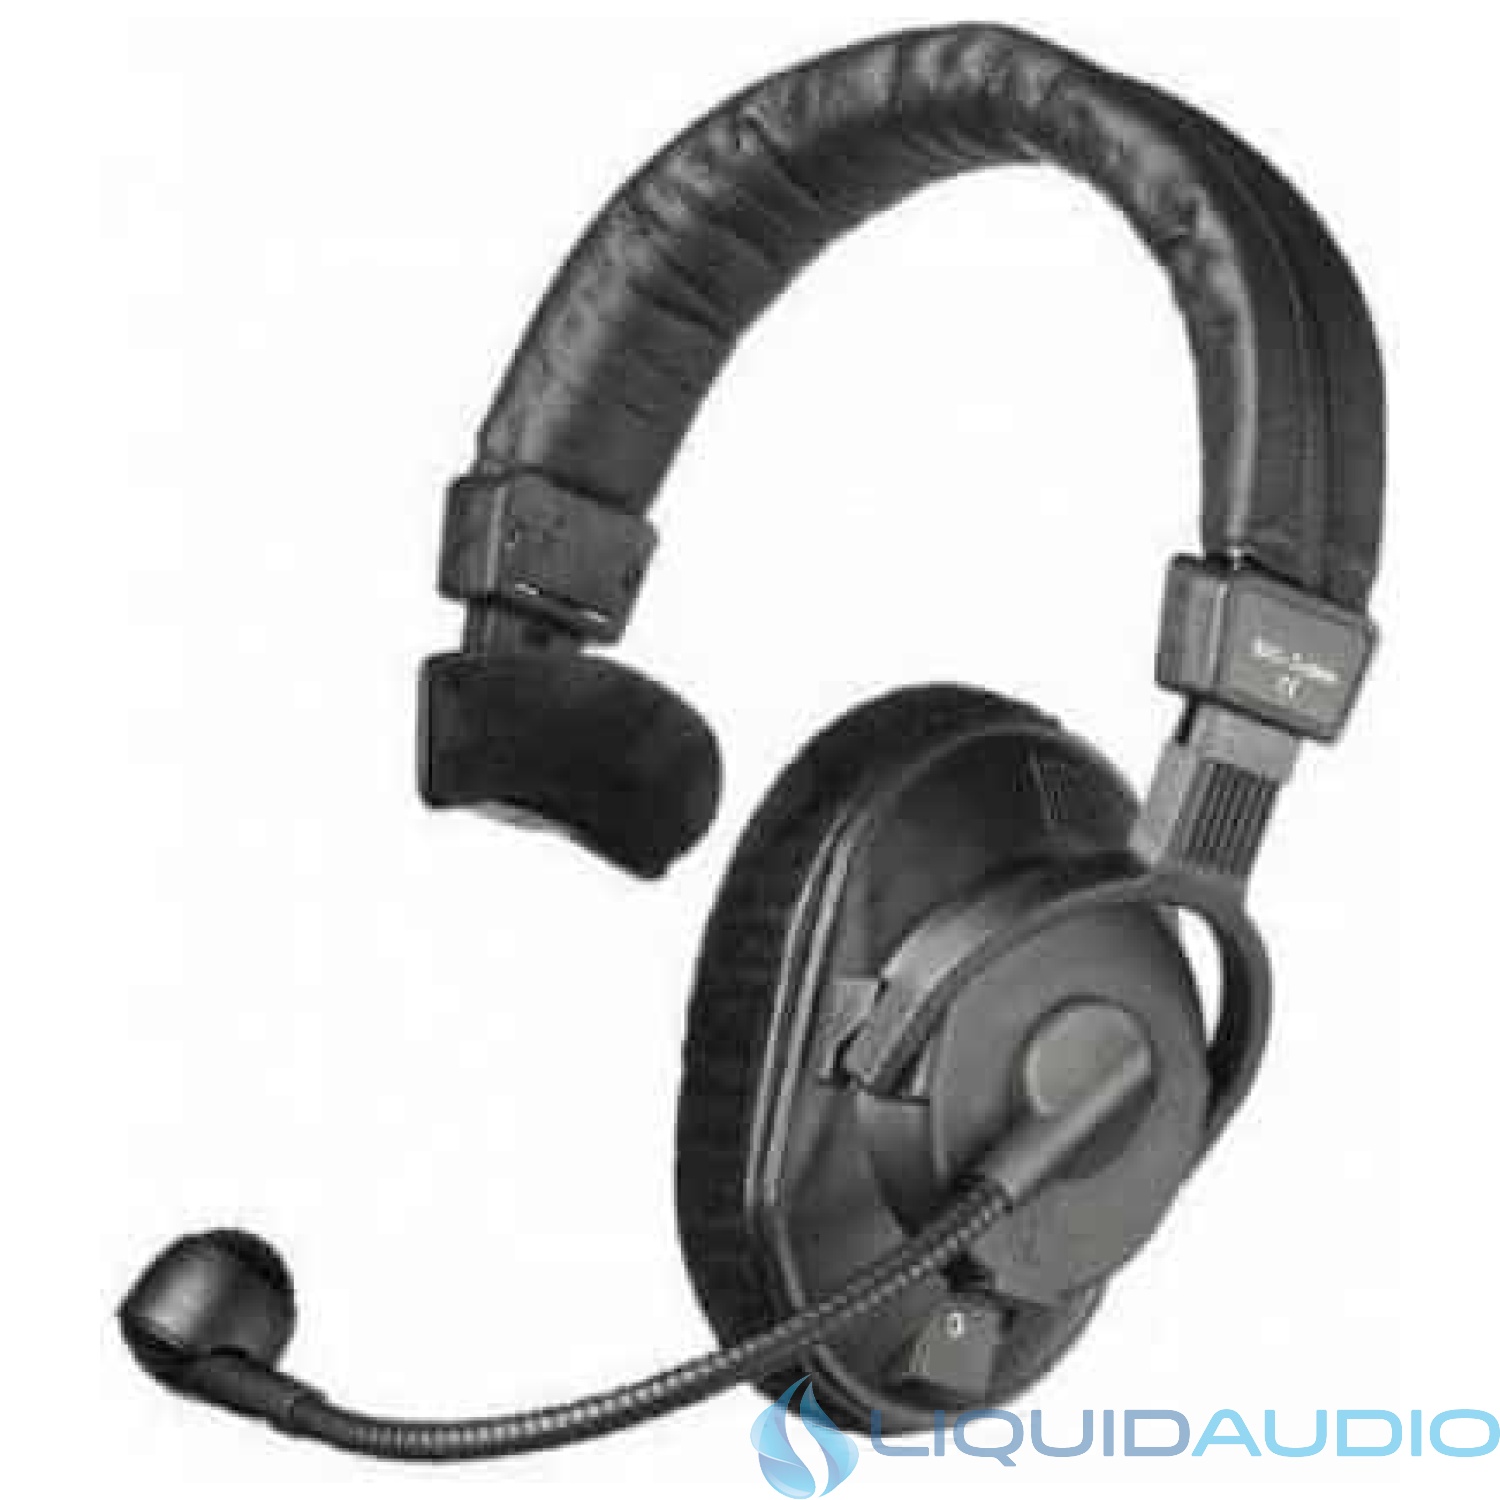 Beyerdynamic DT-280-MKII-200-80 Single-Ear Headset with Dynamic Hypercardioid Microphone, 80 Ohms